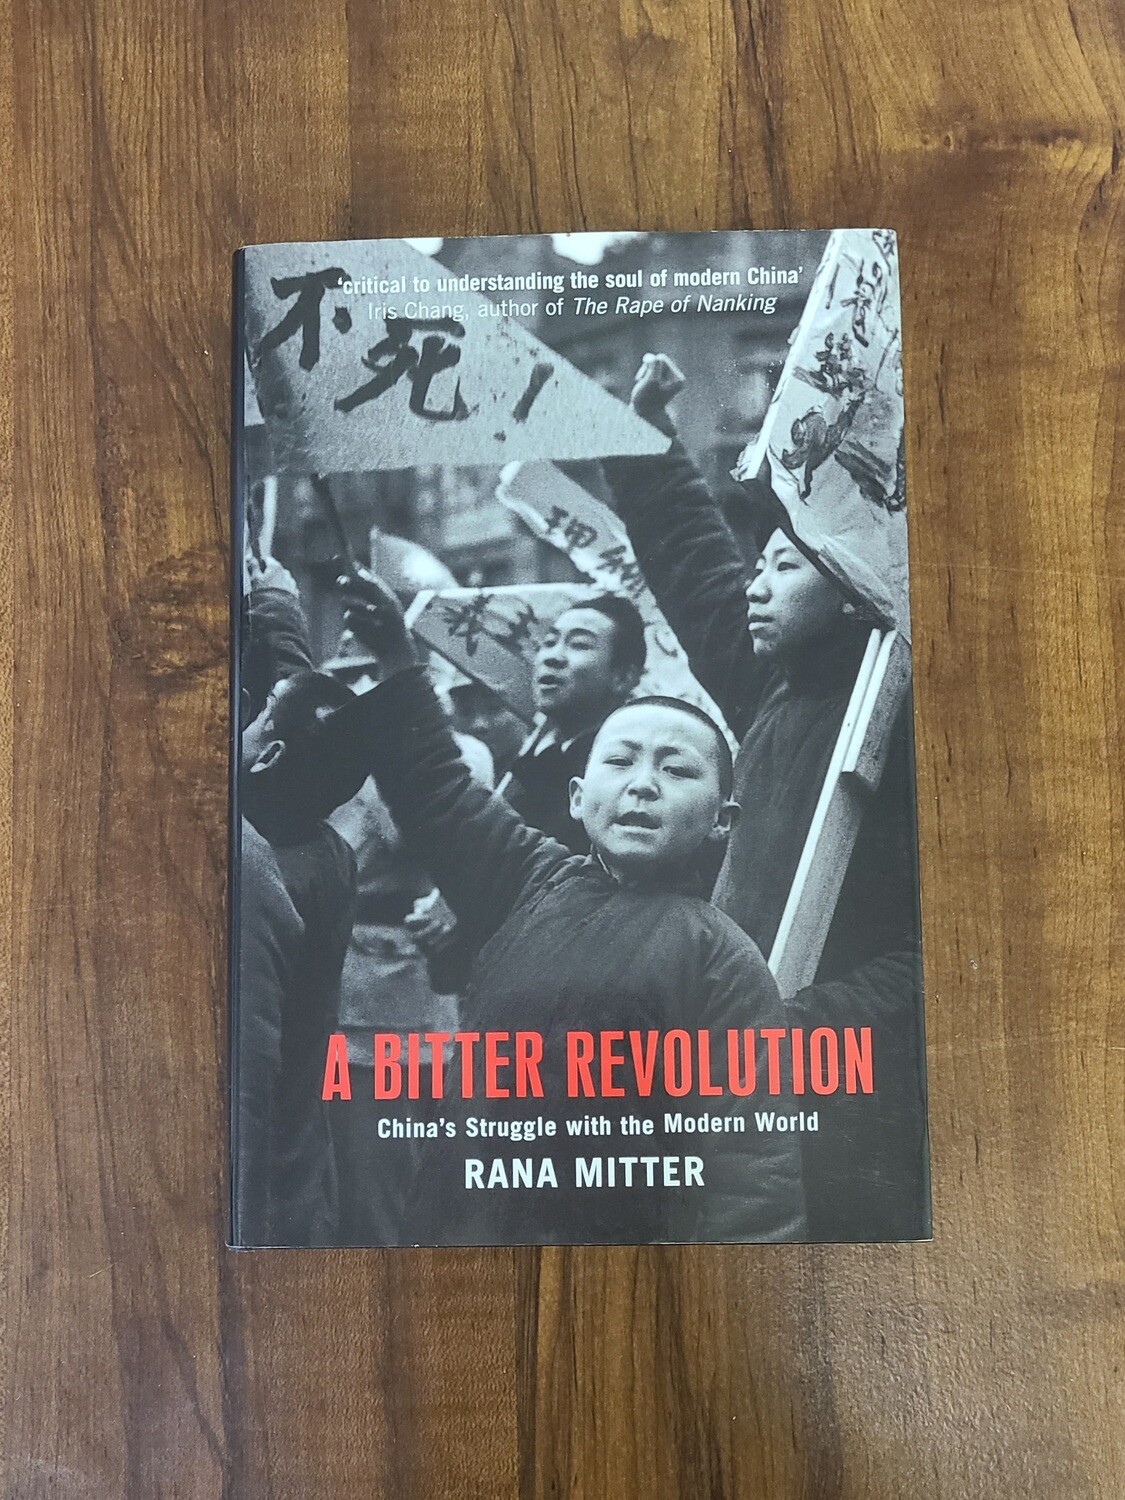 A Bitter Revolution by Rana Mitter